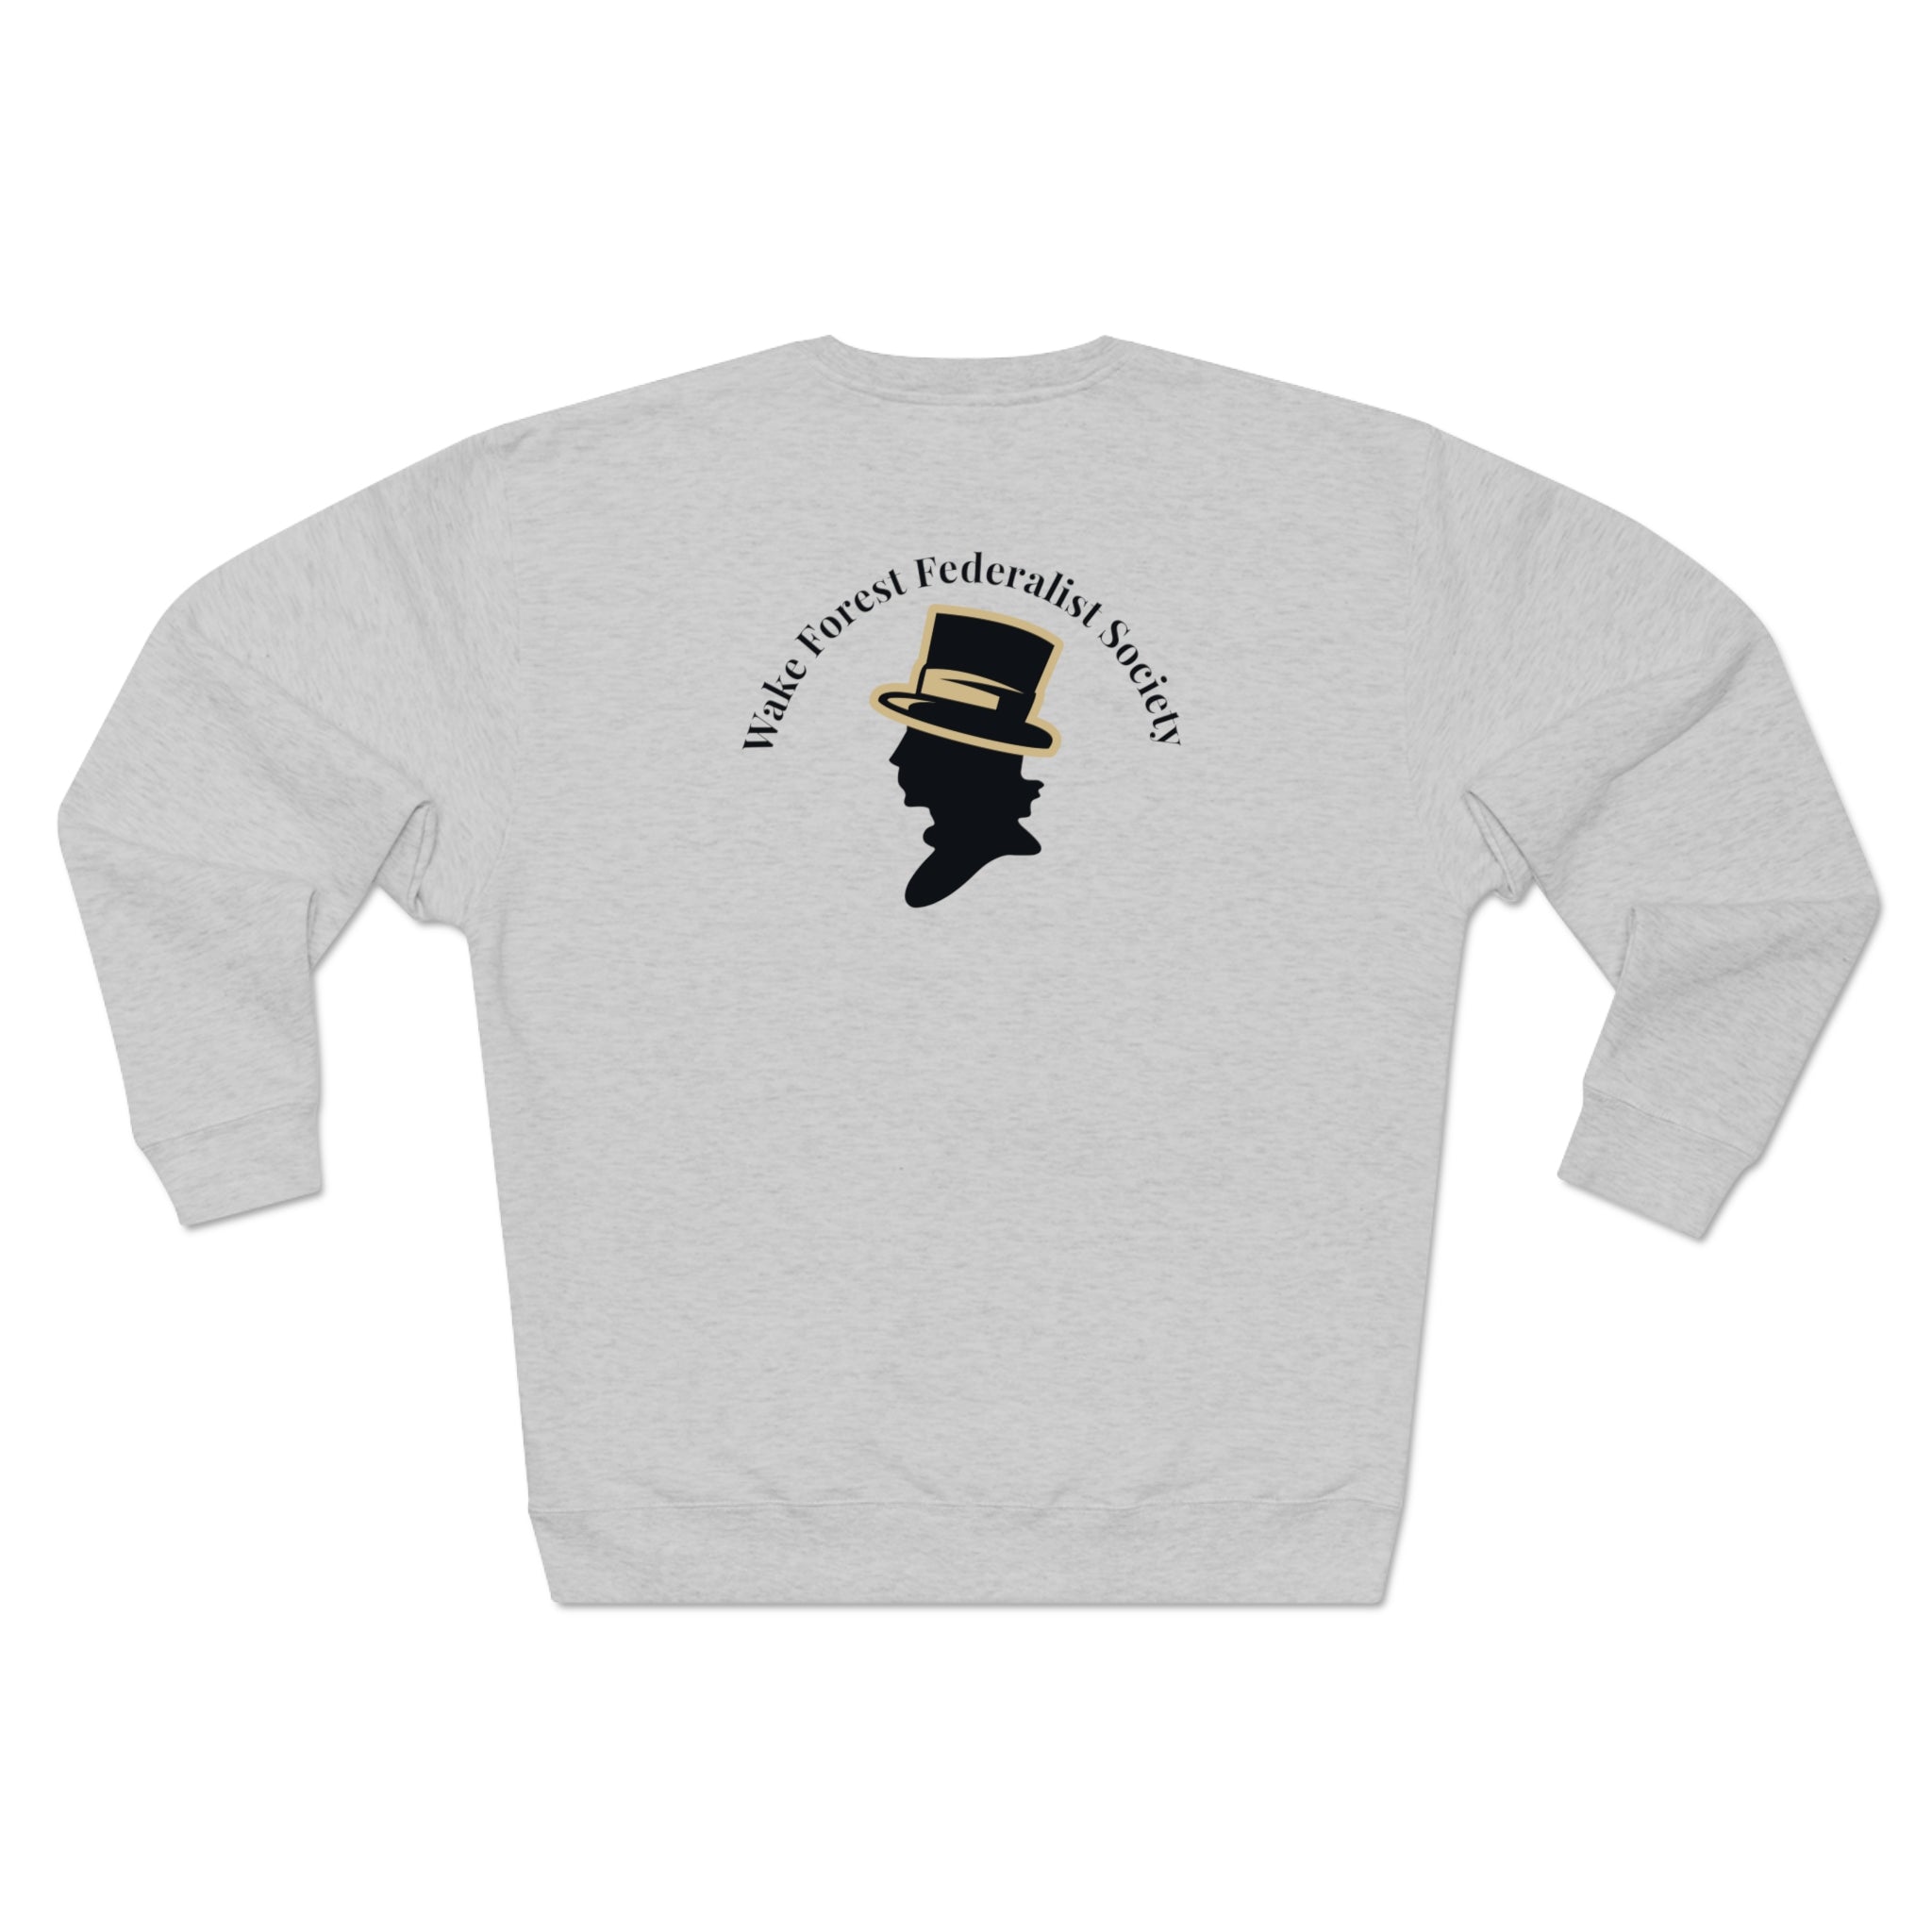 Crewneck Sweatshirt, Two Side (Wake Forest Federalist Society)